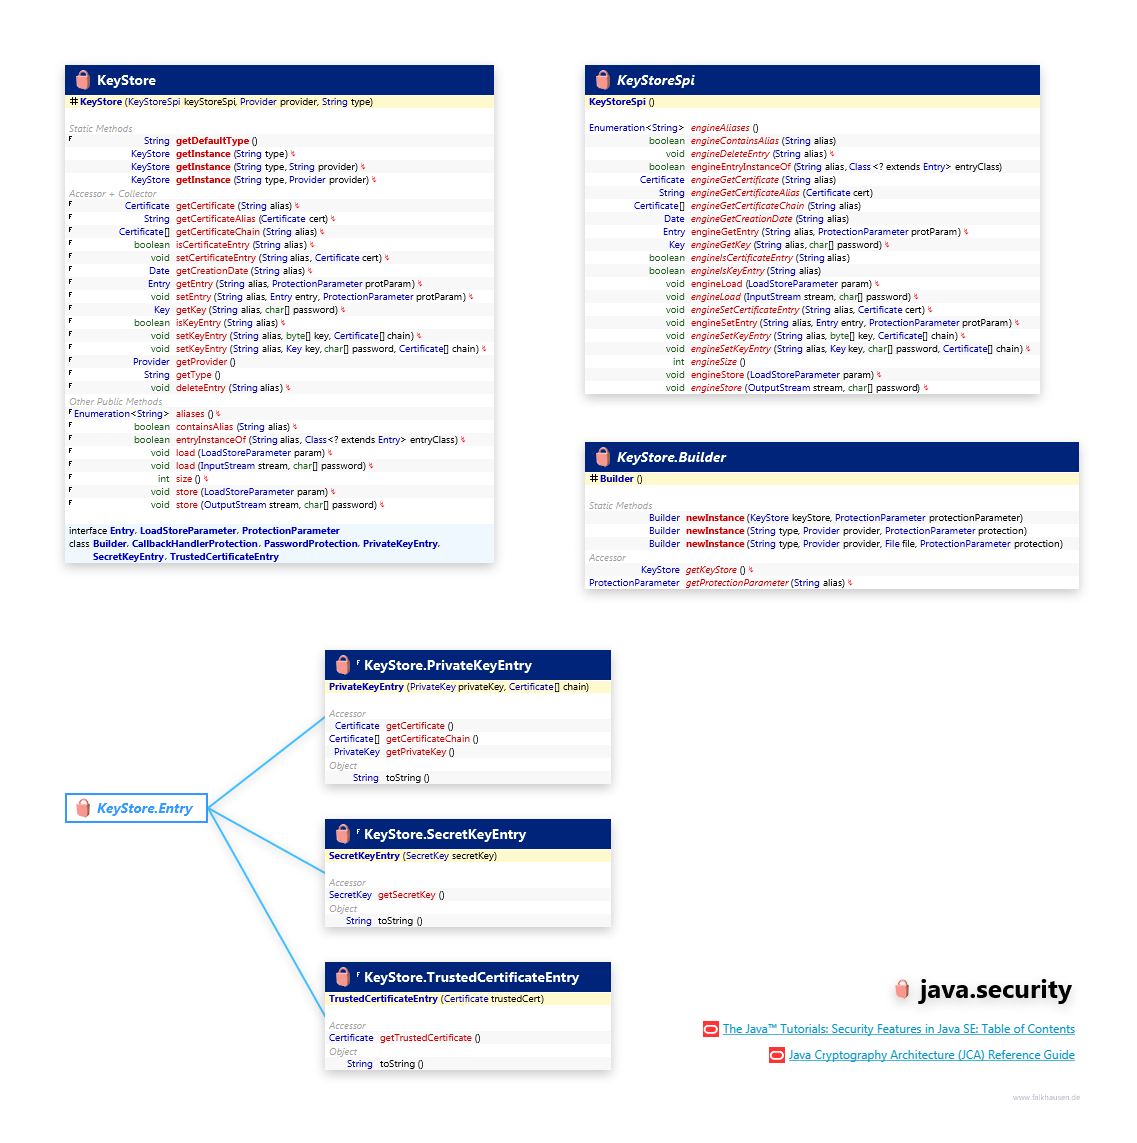 java.security KeyStore class diagram and api documentation for Java 7